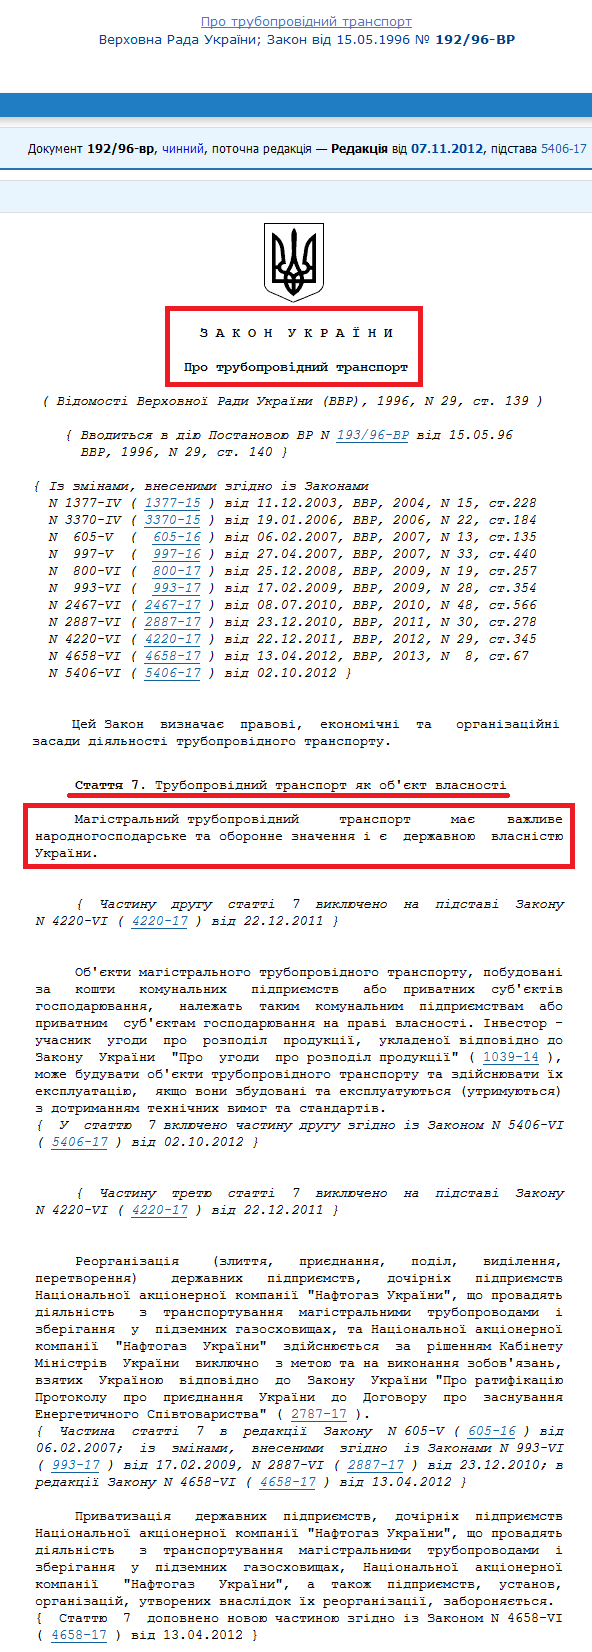 http://zakon4.rada.gov.ua/laws/show/192/96-%D0%B2%D1%80